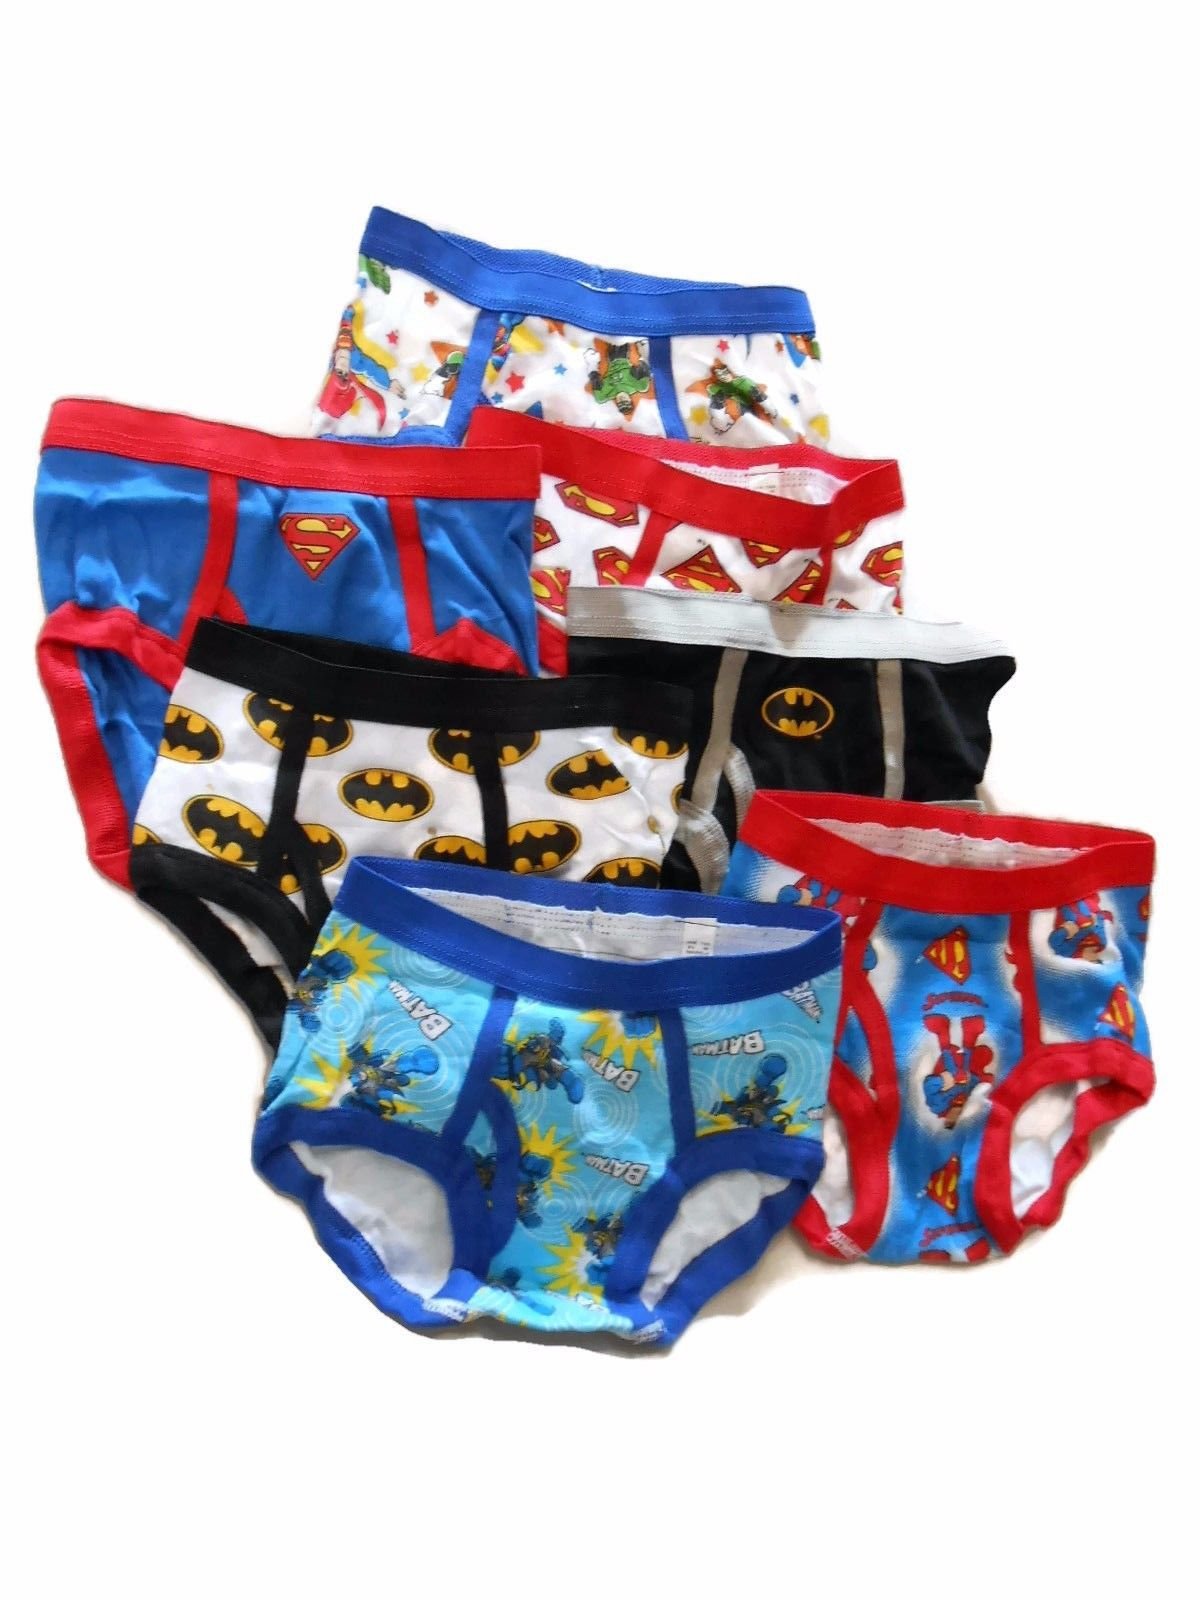 DC Superfriends Toddler Boys Underwear, 7-Pack - image 3 of 4